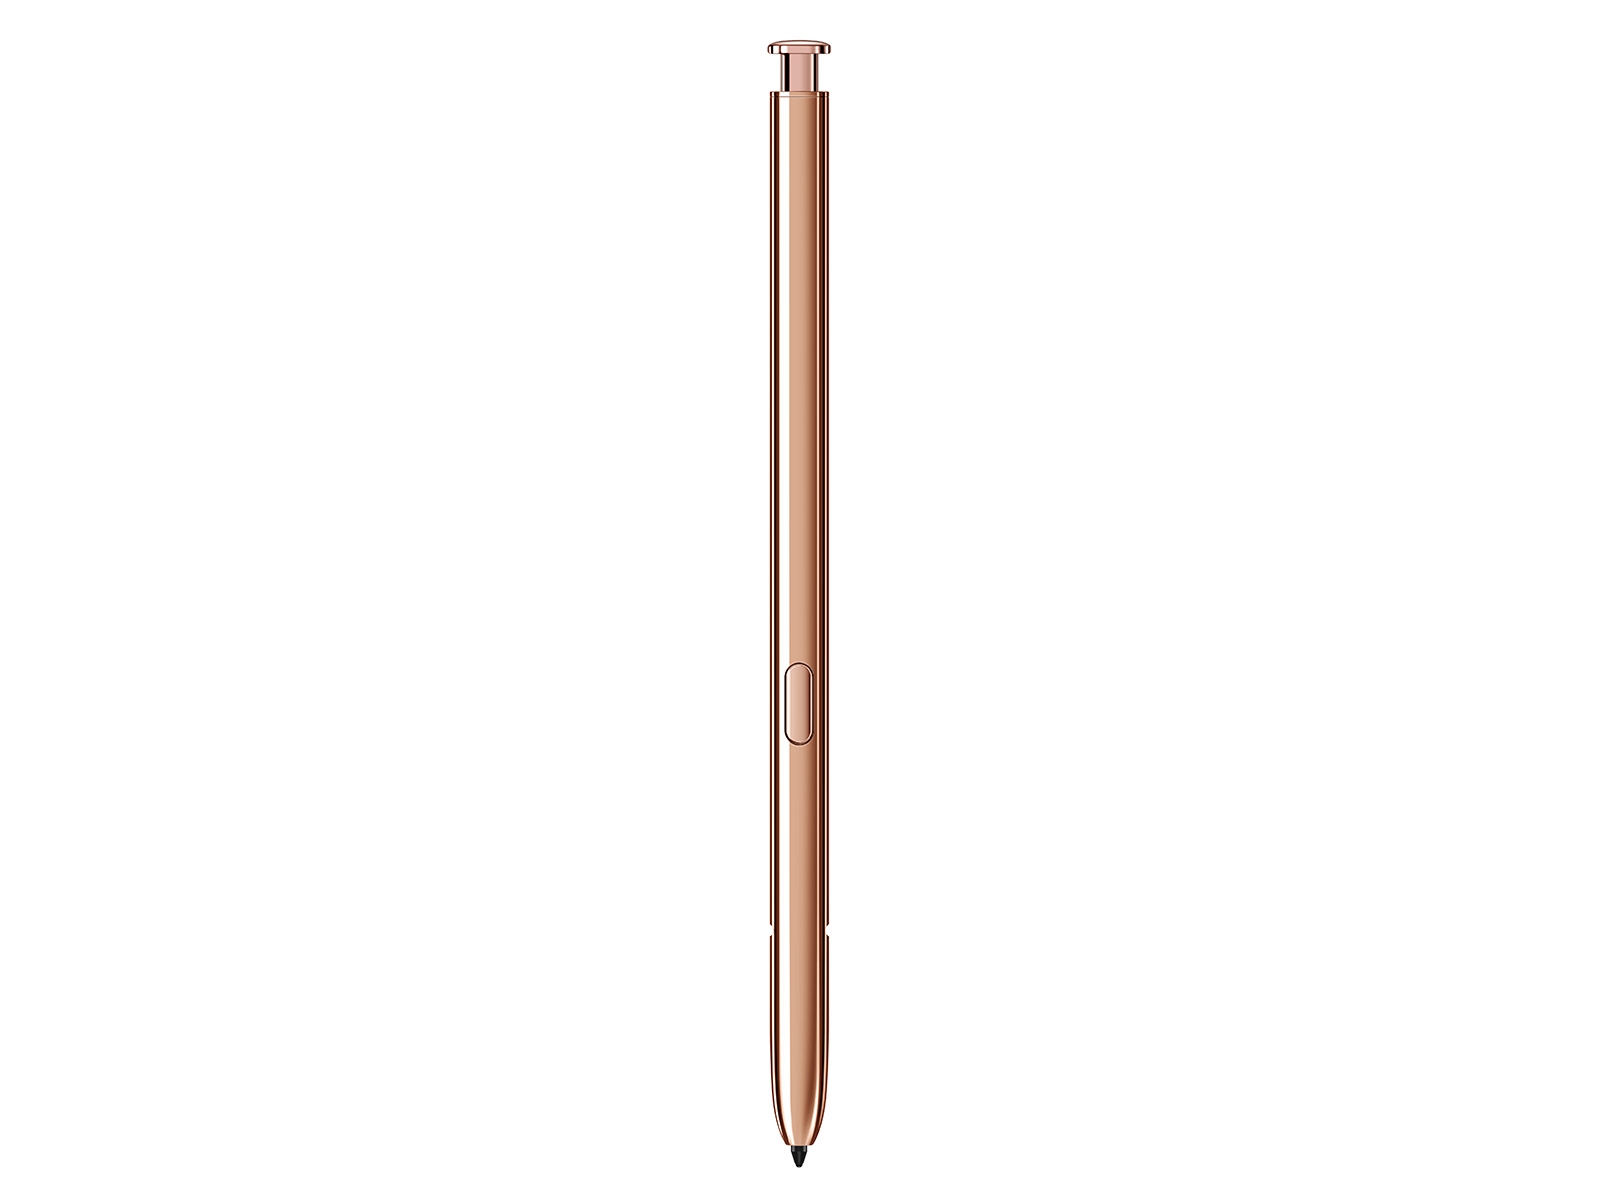 Galaxy Note 5g S Pen Copper Mobile Accessories Ej Pn980baegus Samsung Us